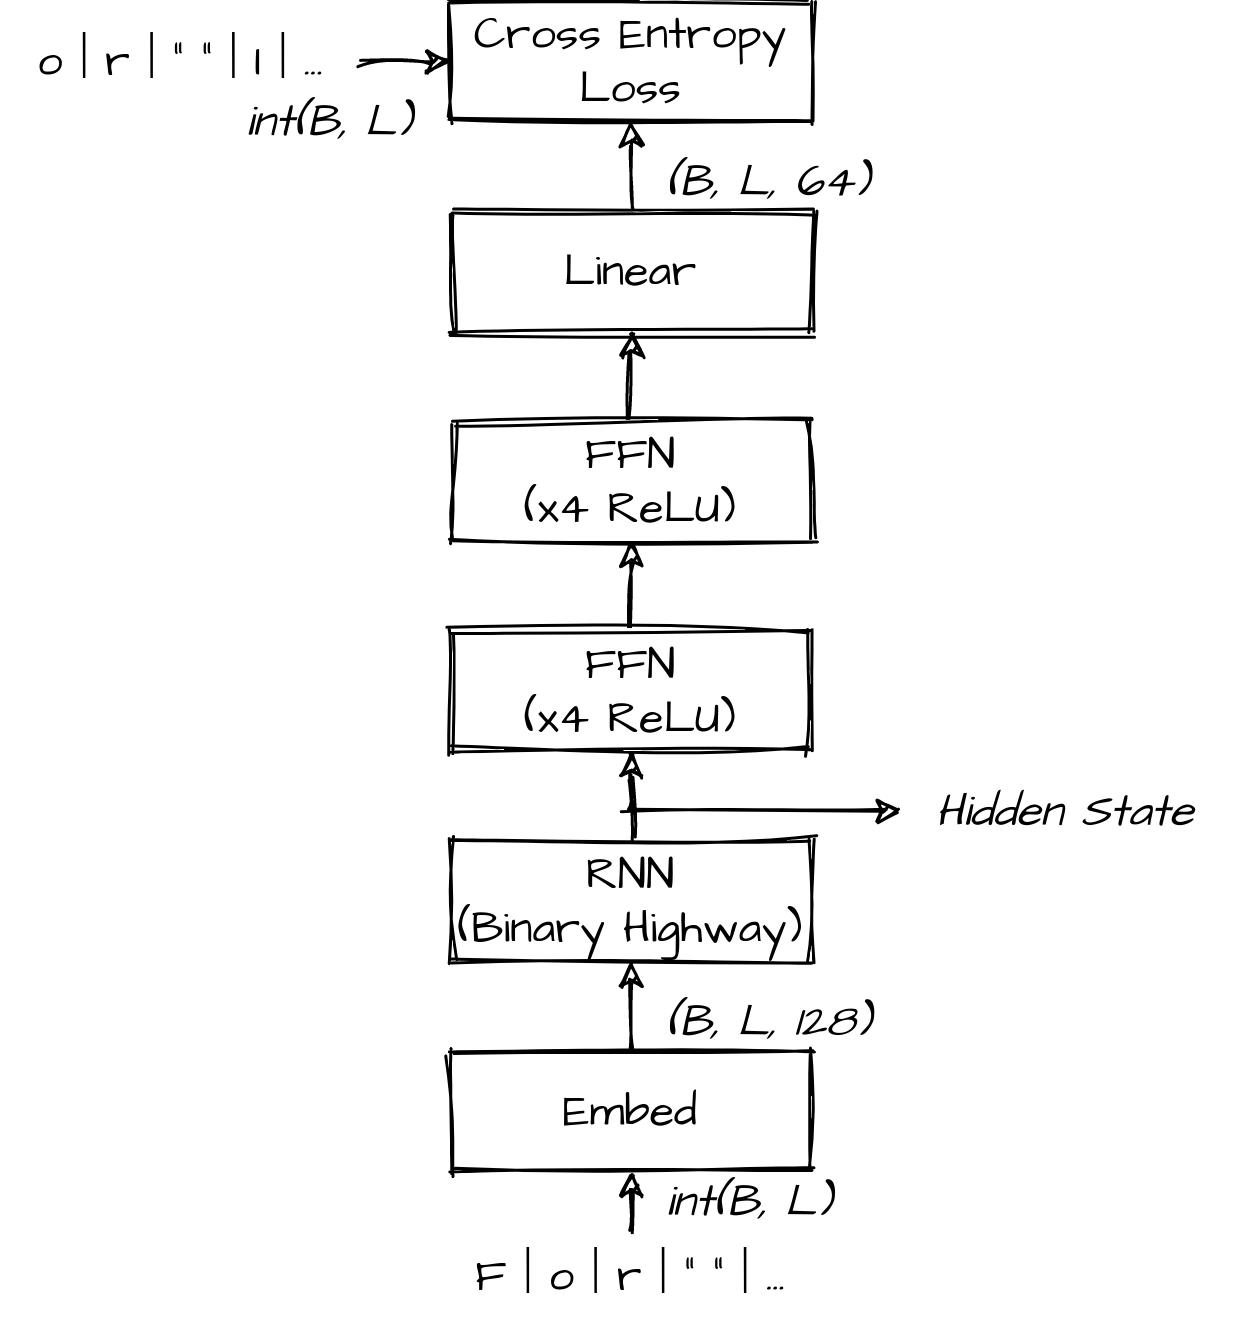 model diagram showing a stack: embed, RNN, FFN, FFN, Linear, Cross Entropy Loss